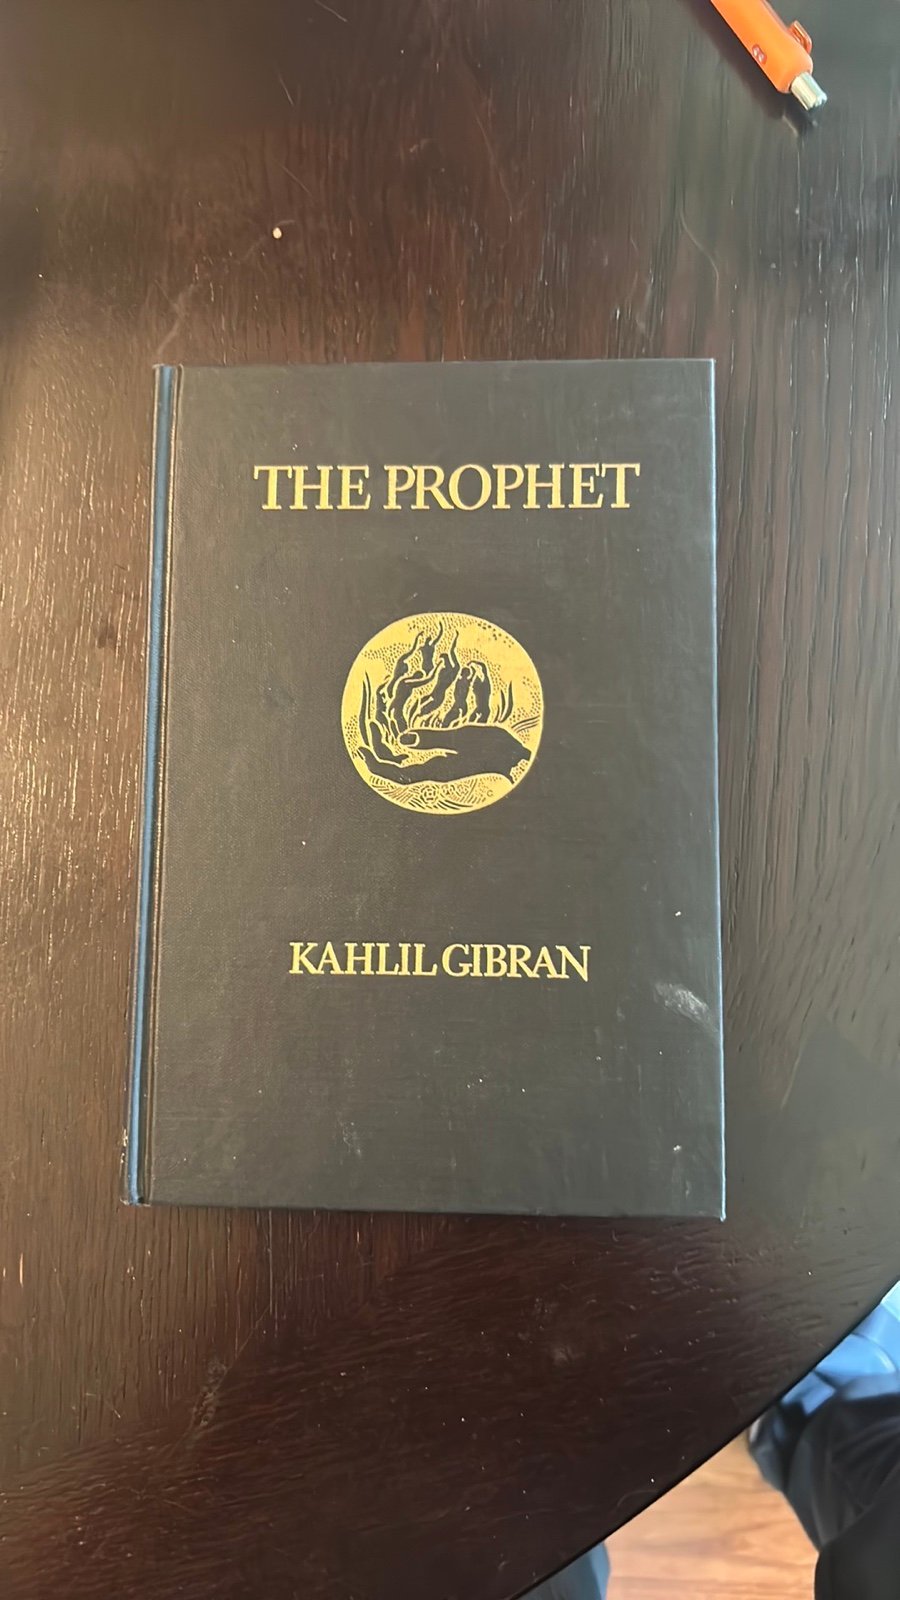 The Prophet by Khalil Gibran. 2X3VpwknS